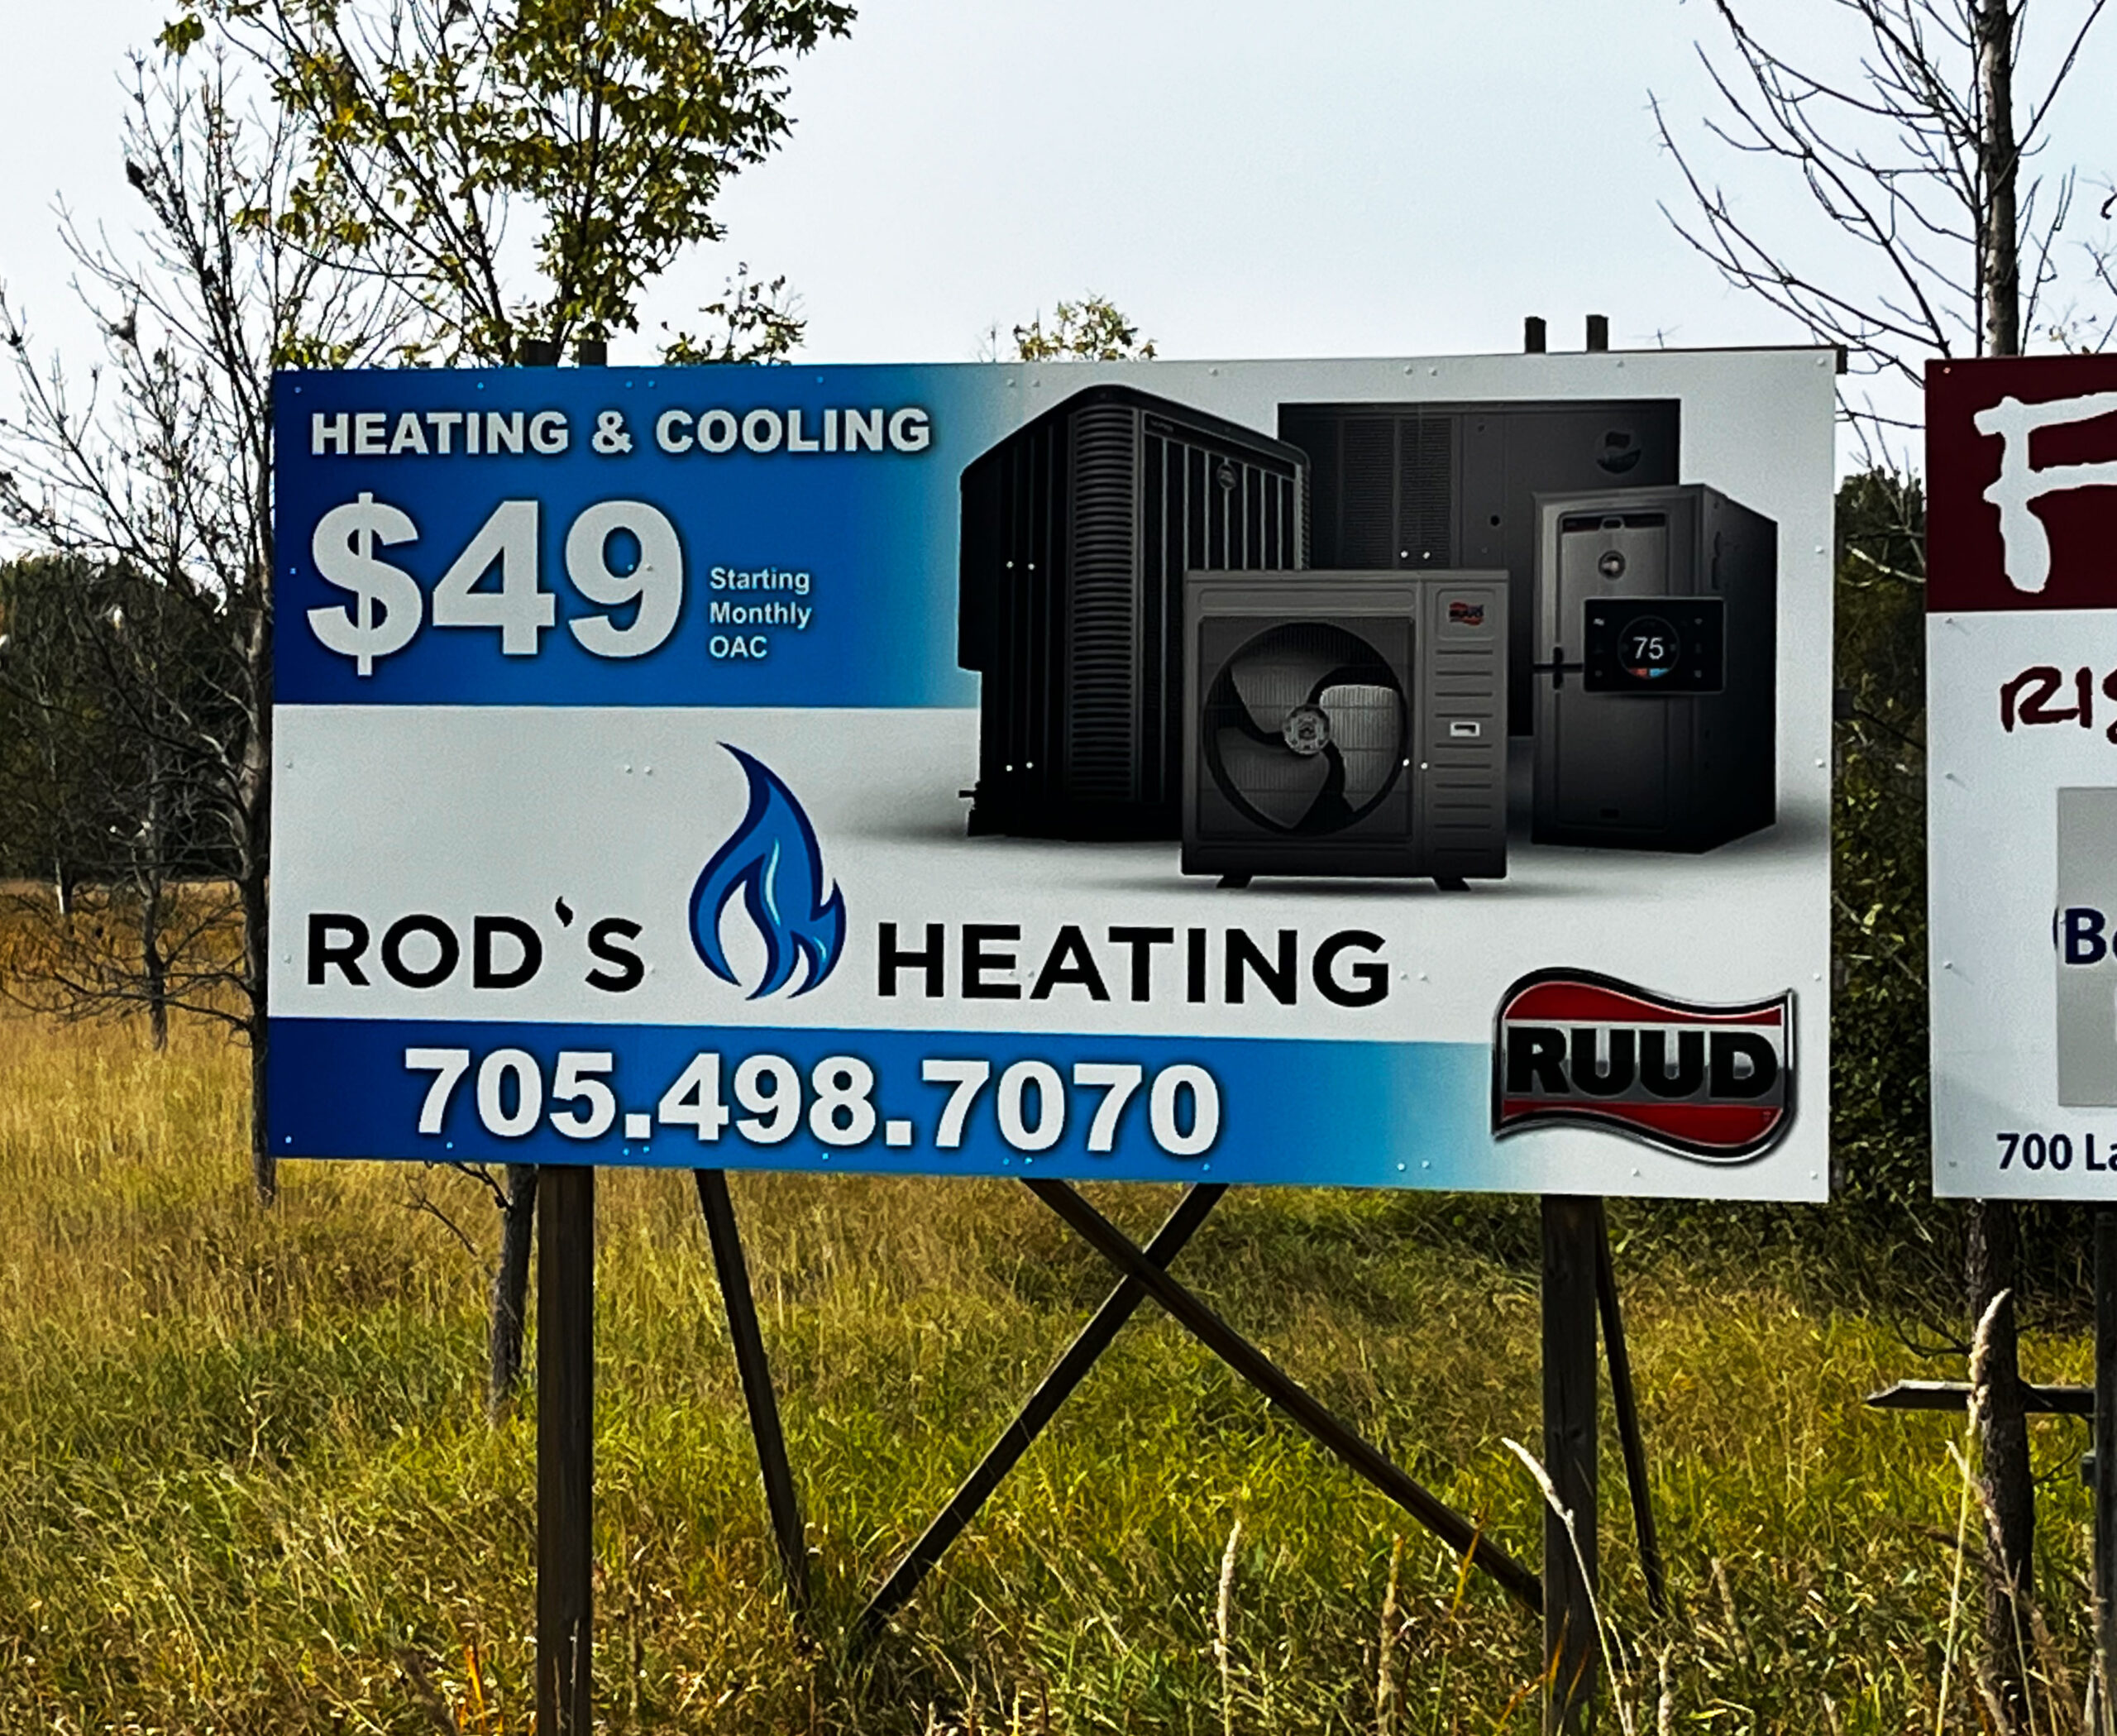 Rod's Heating Reflective Billboard